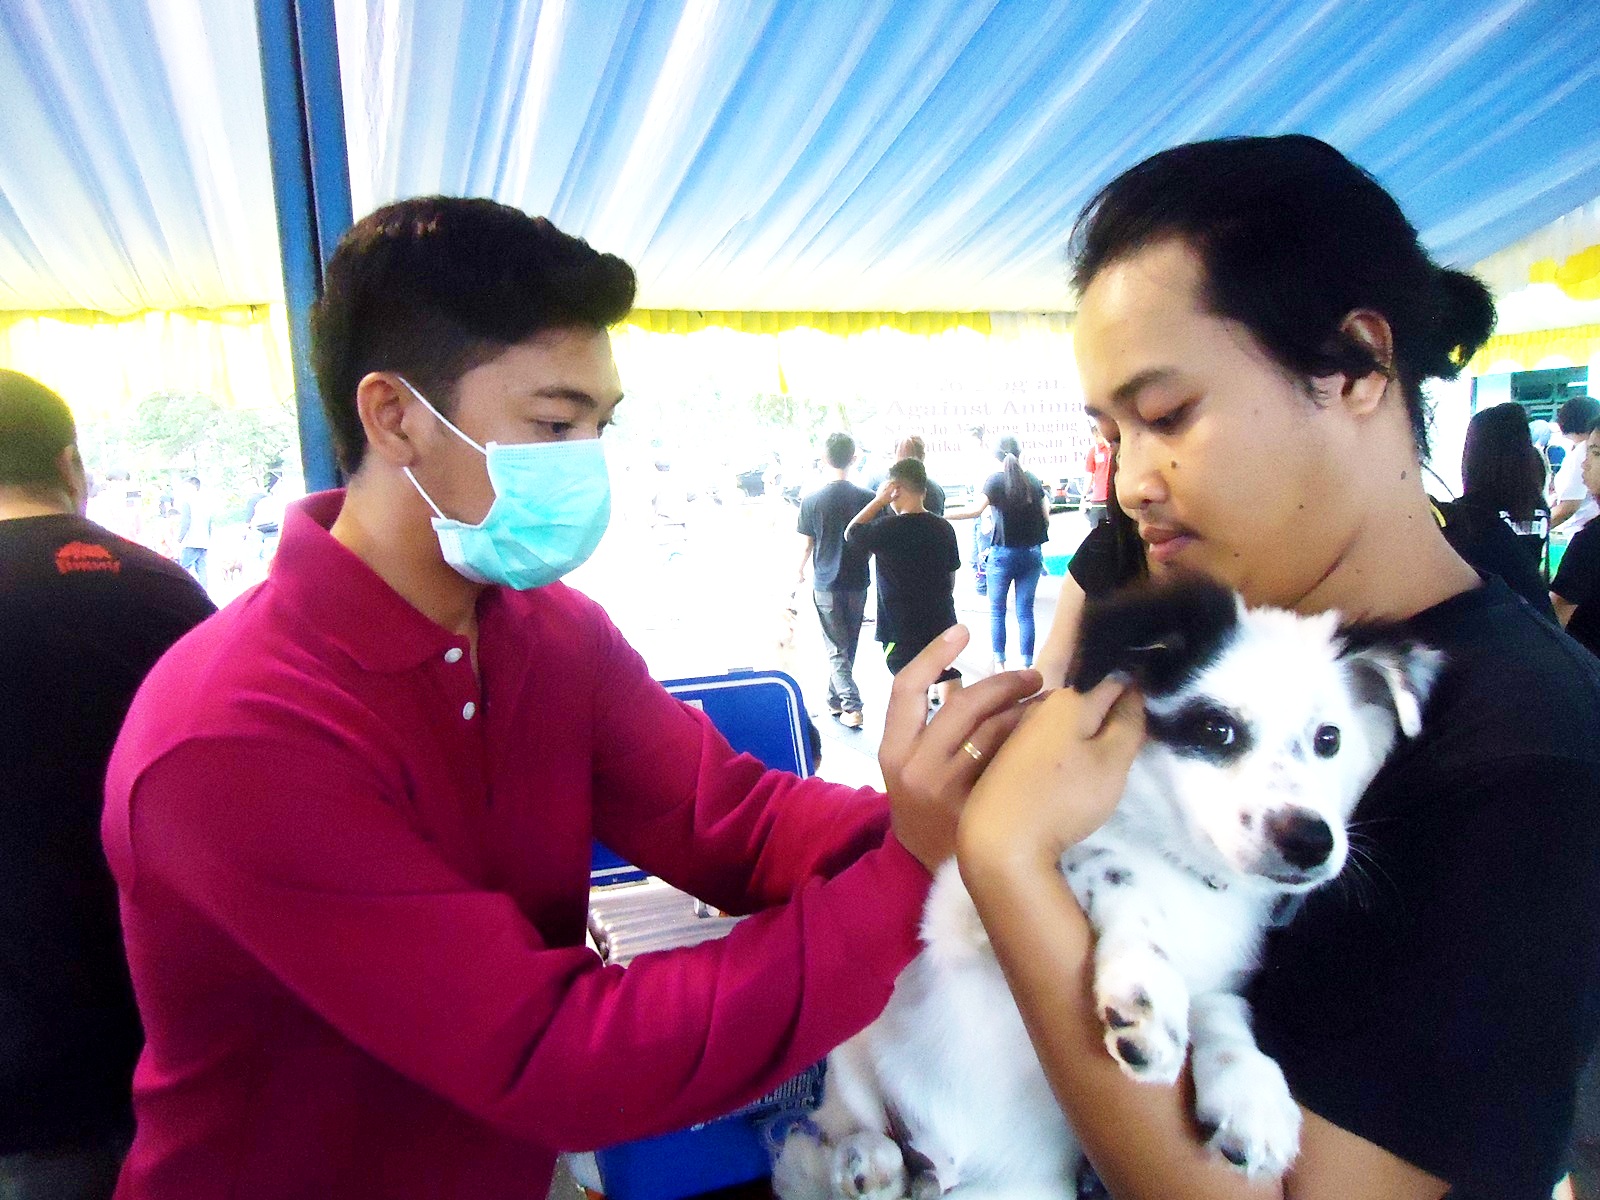 Pemberian vaksin rabies oleh Dinas Pertanian dan Peternakan Kota Tomohon, pada acara Fun Dog Festival yang diadakan oleh Dog Lovers Tomohon (DLT) di Kota Tomohon, Sulut, pada Sabtu (10/12/2016). Foto : Themmy Doaly